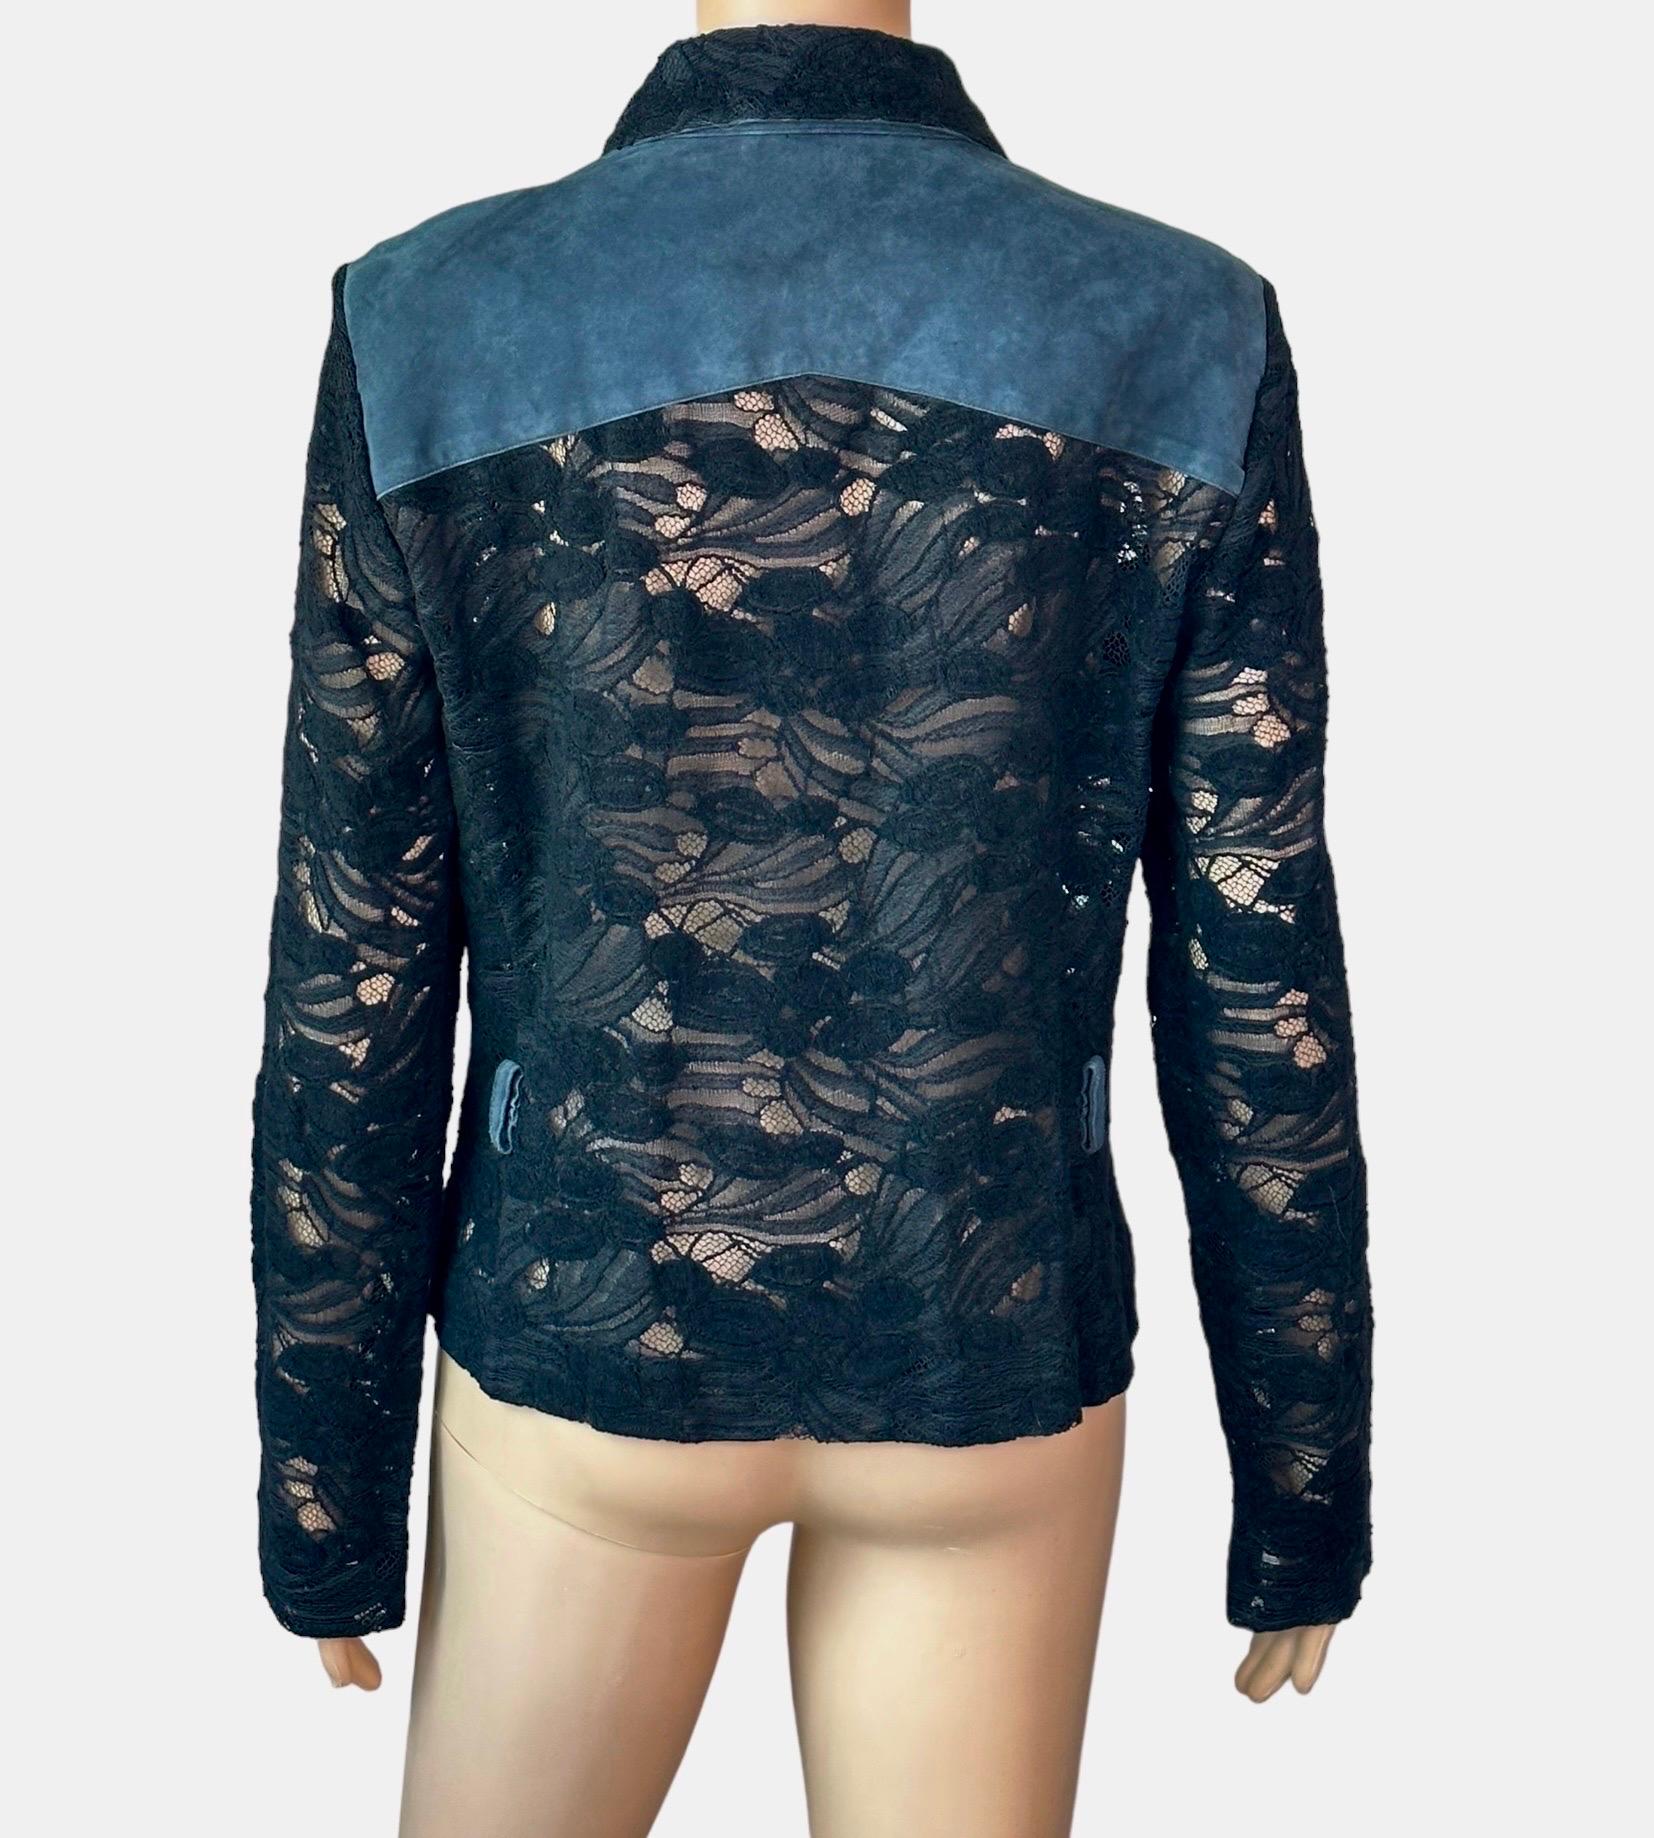 Gianni Versace c.2001 Vintage Lace Sheer Black Shirt Top Jacket For Sale 3